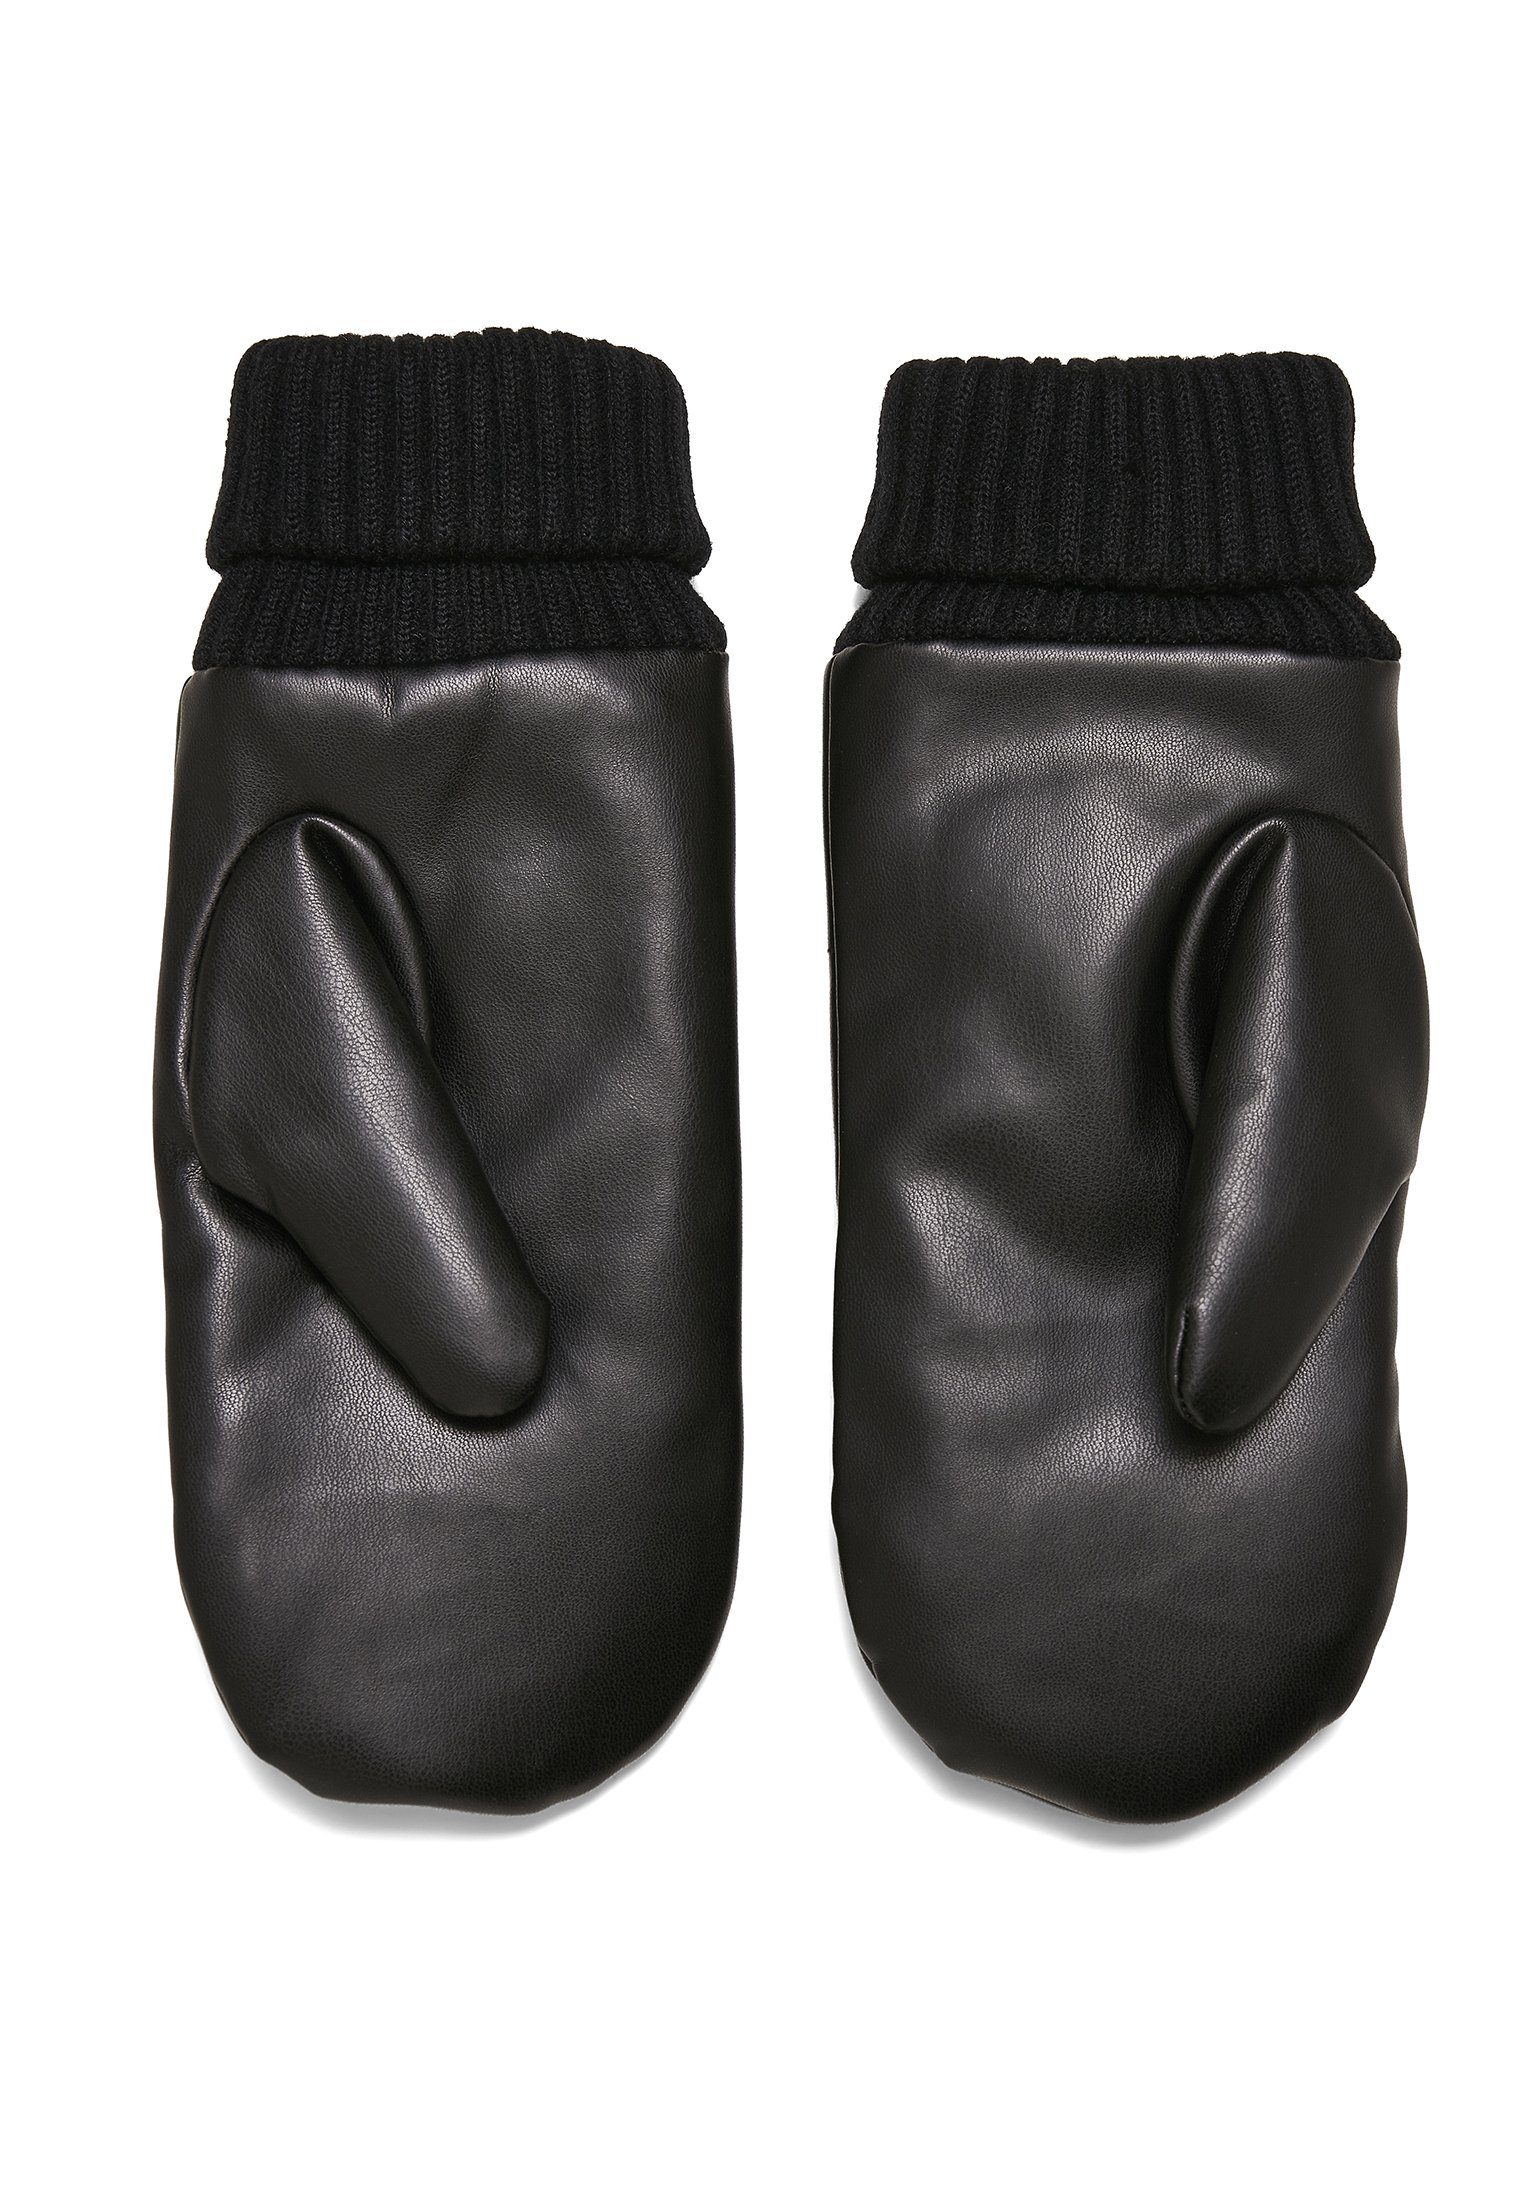 CLASSICS Unisex URBAN Leather Imitation Gloves Baumwollhandschuhe Puffer